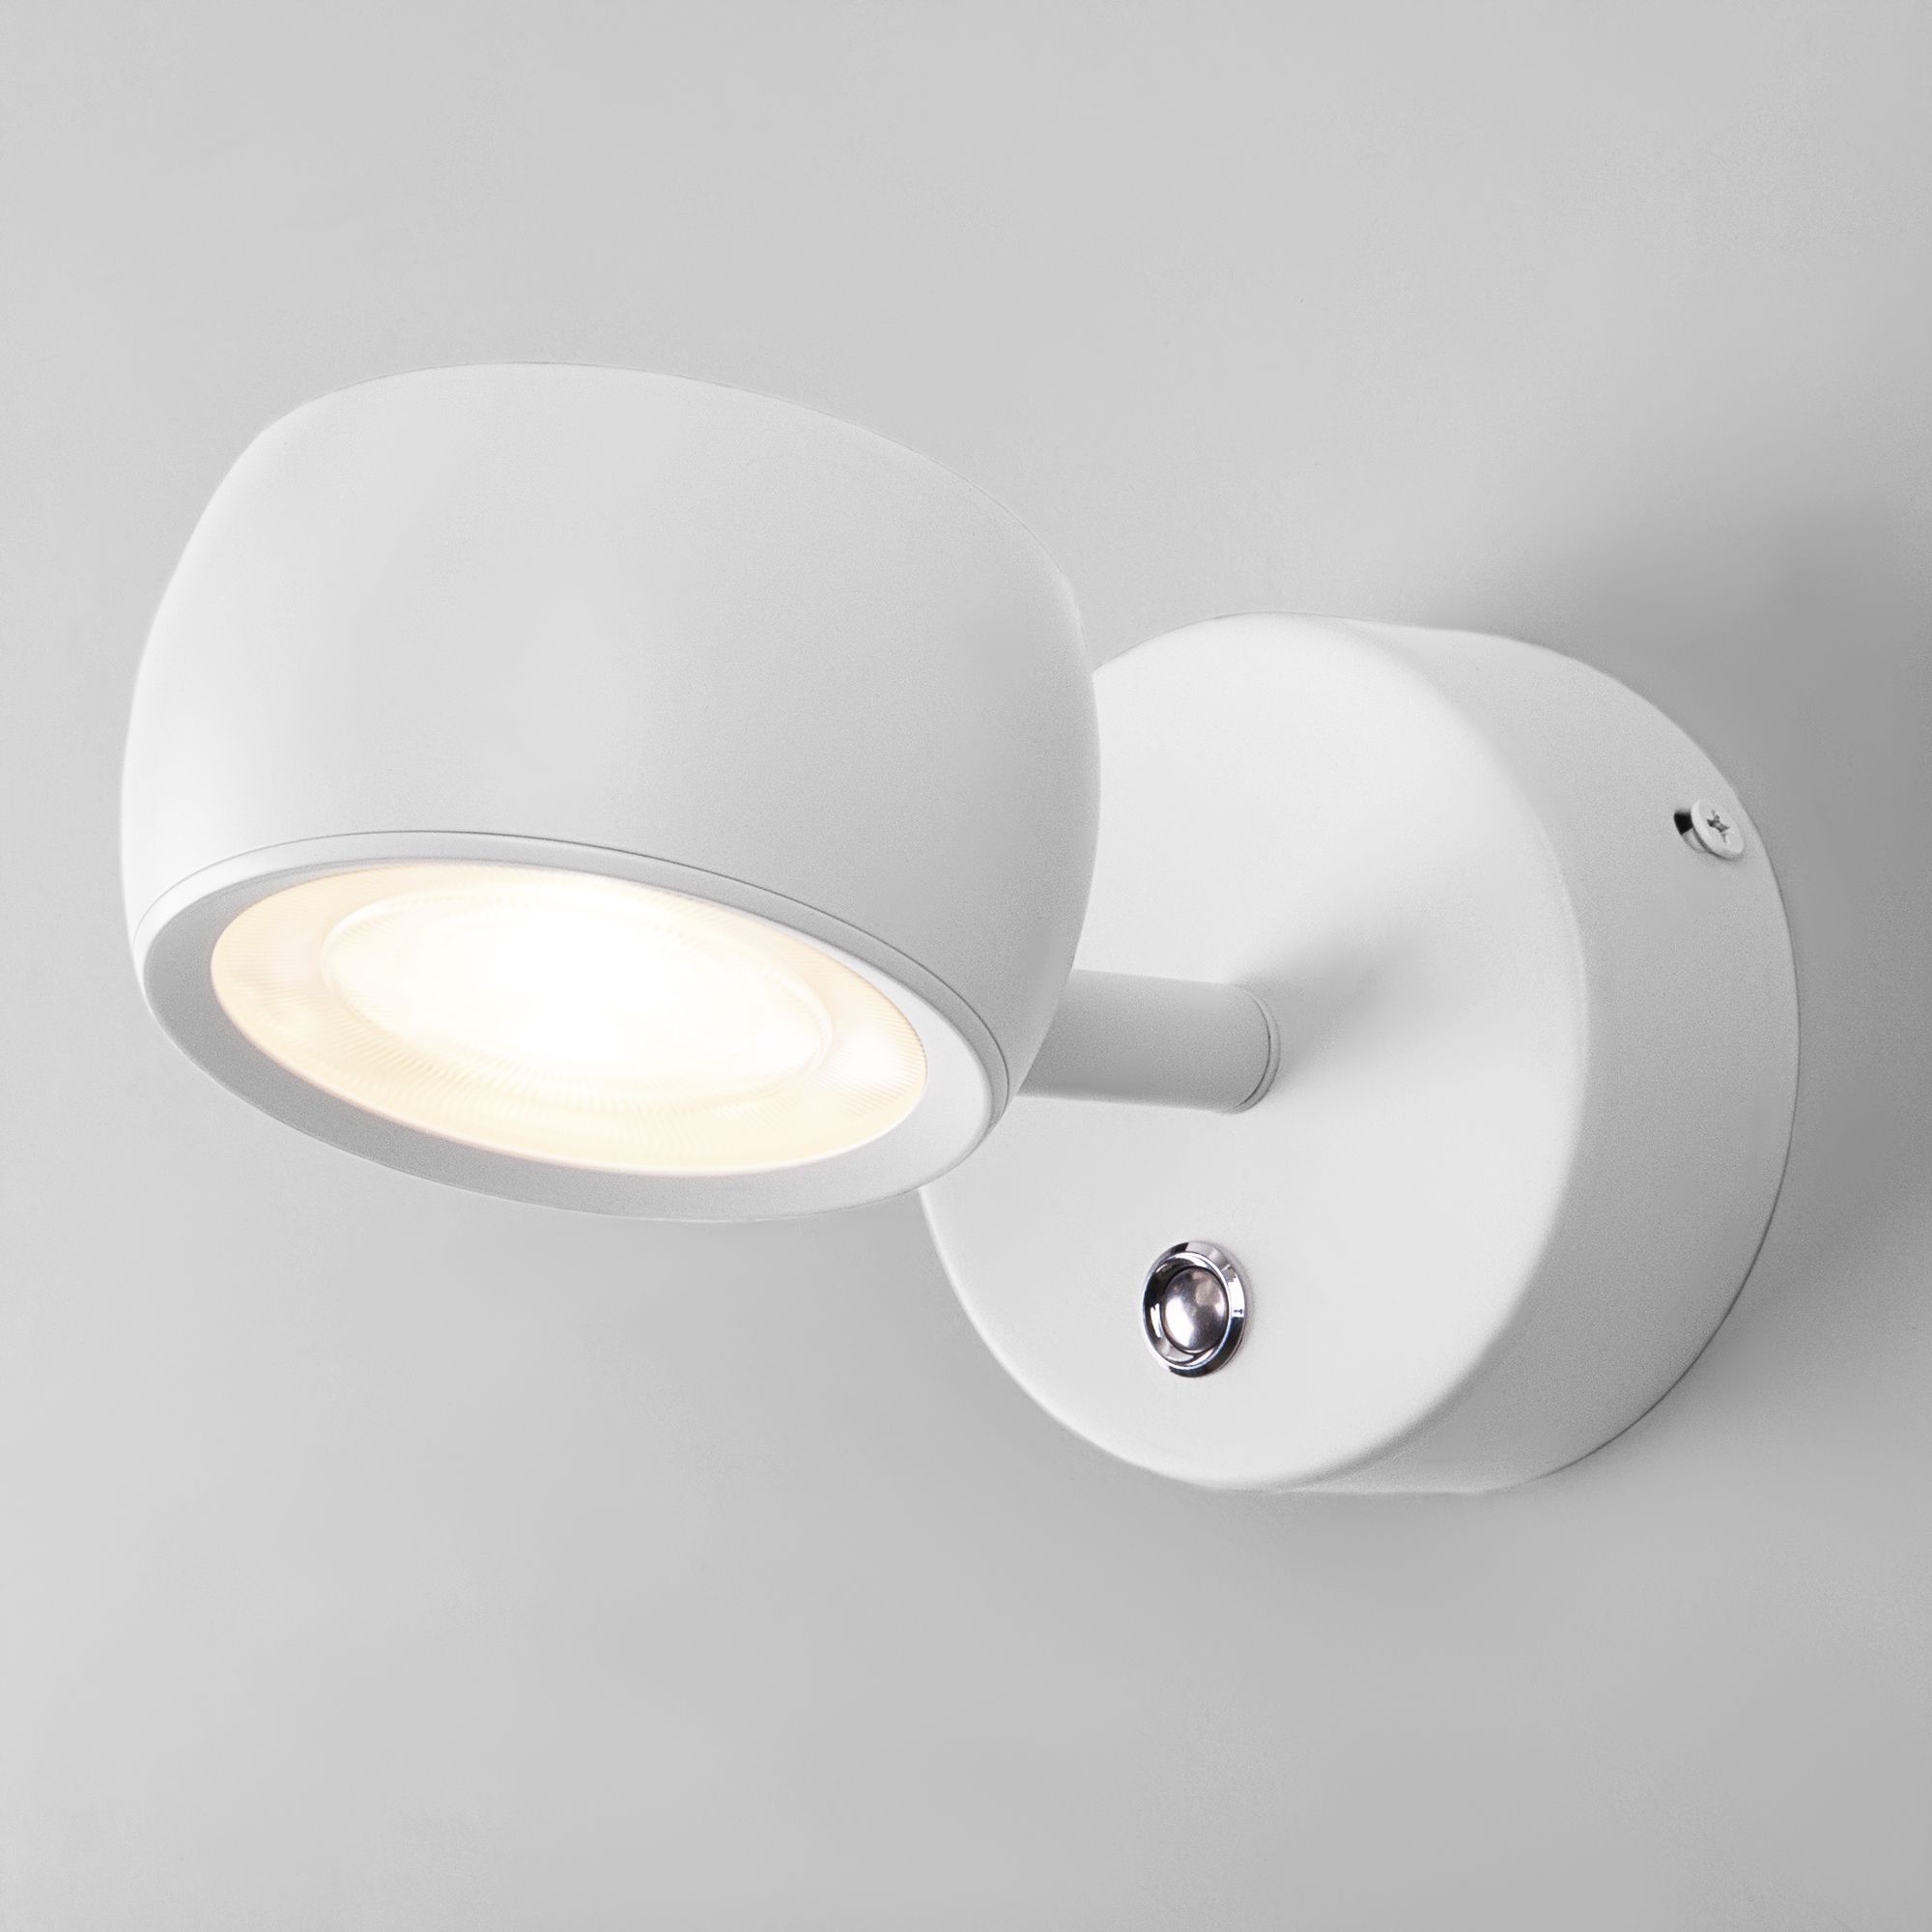 Настенный светодиодный светильник Oriol LED MRL LED 1018 белый MRL LED 1018